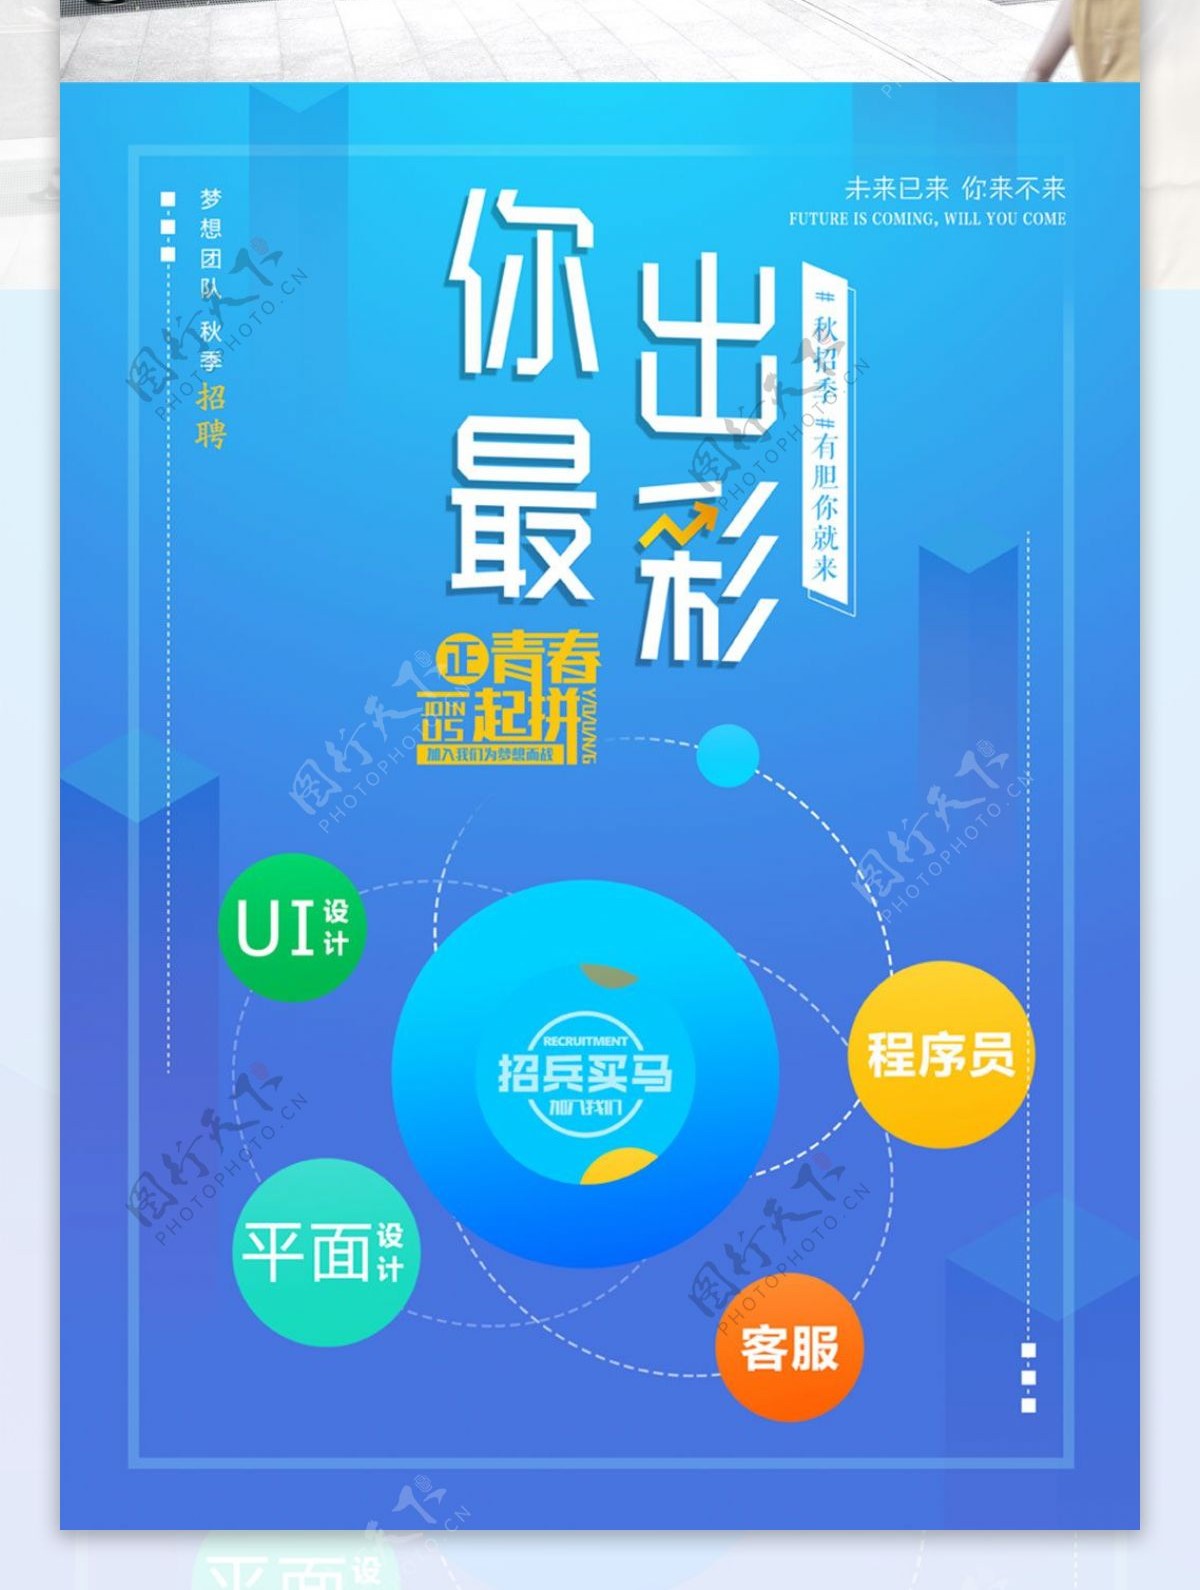 2.5D秋招季招聘海报设计